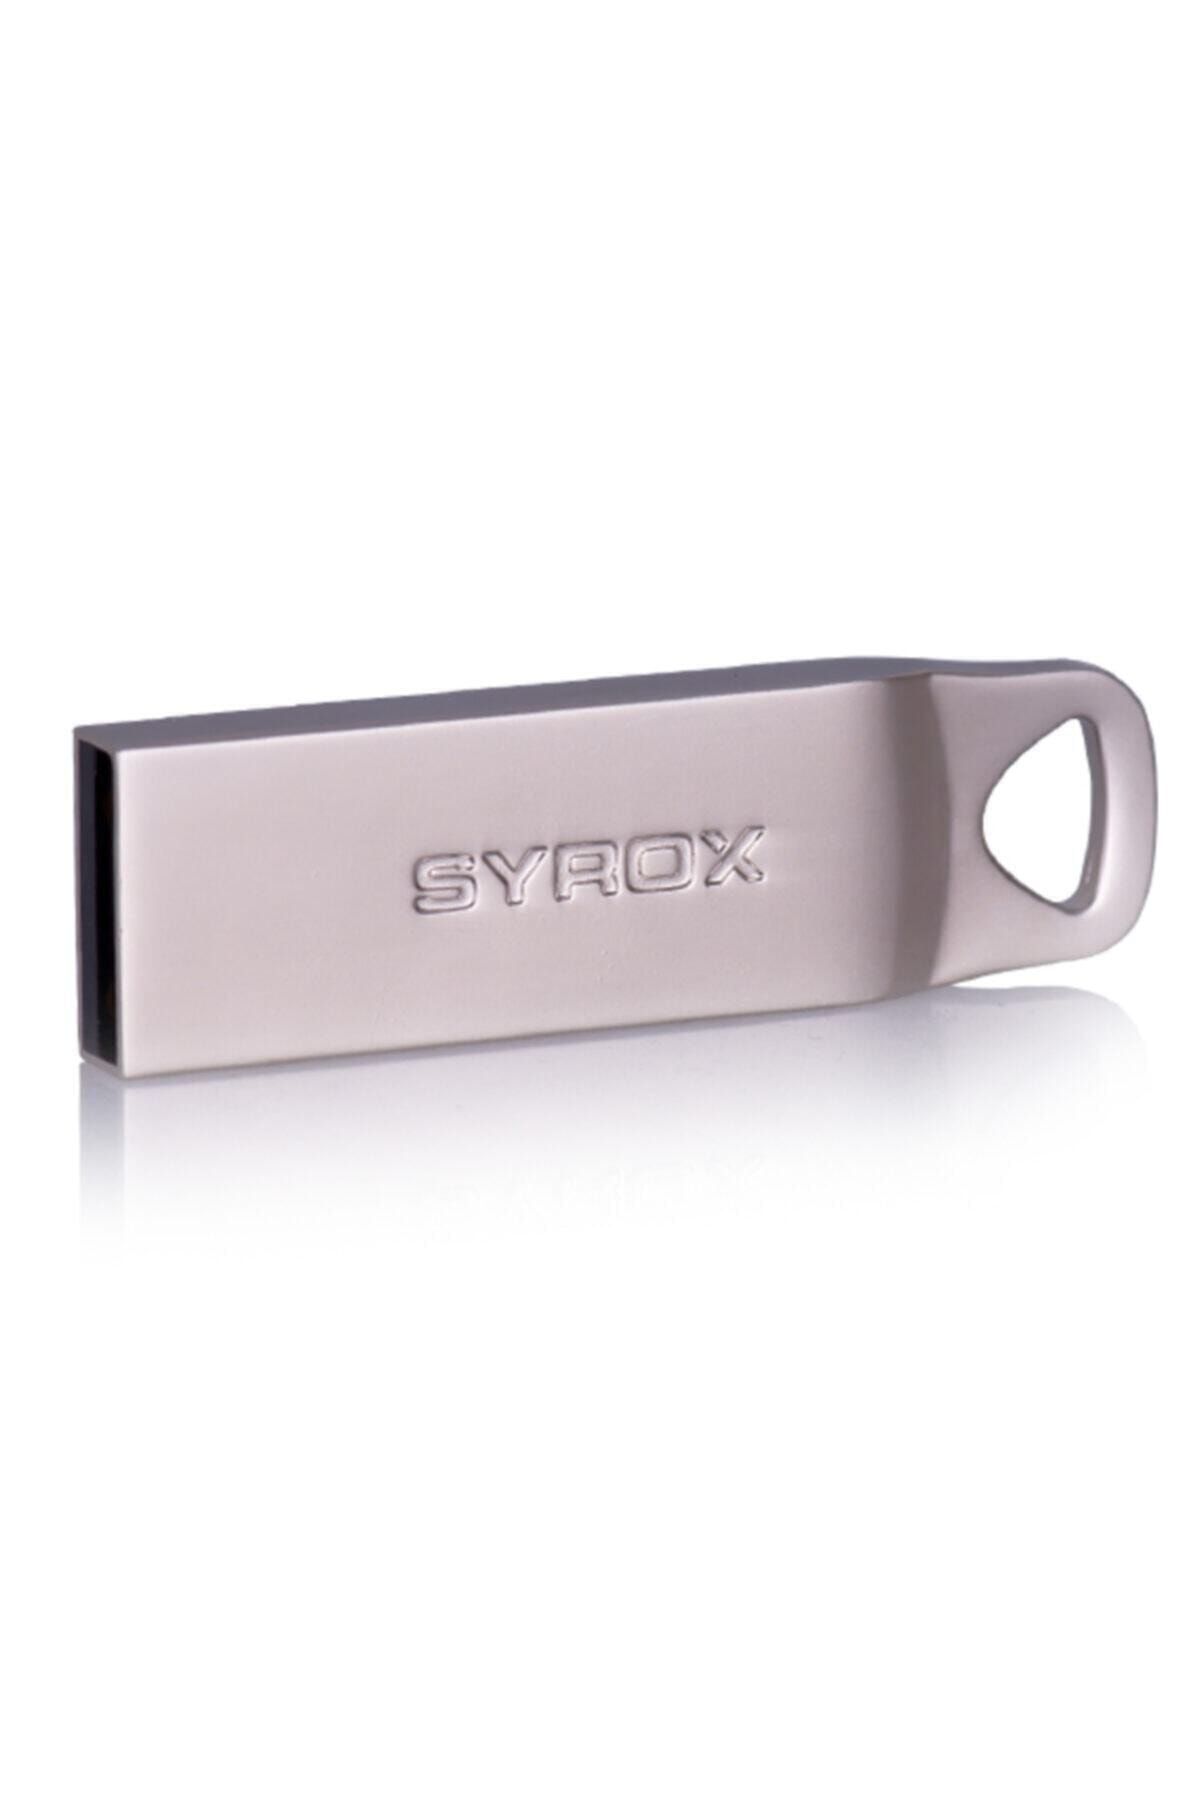 Syrox Um 16 Gb Metal 2 Usb Flash Bellek